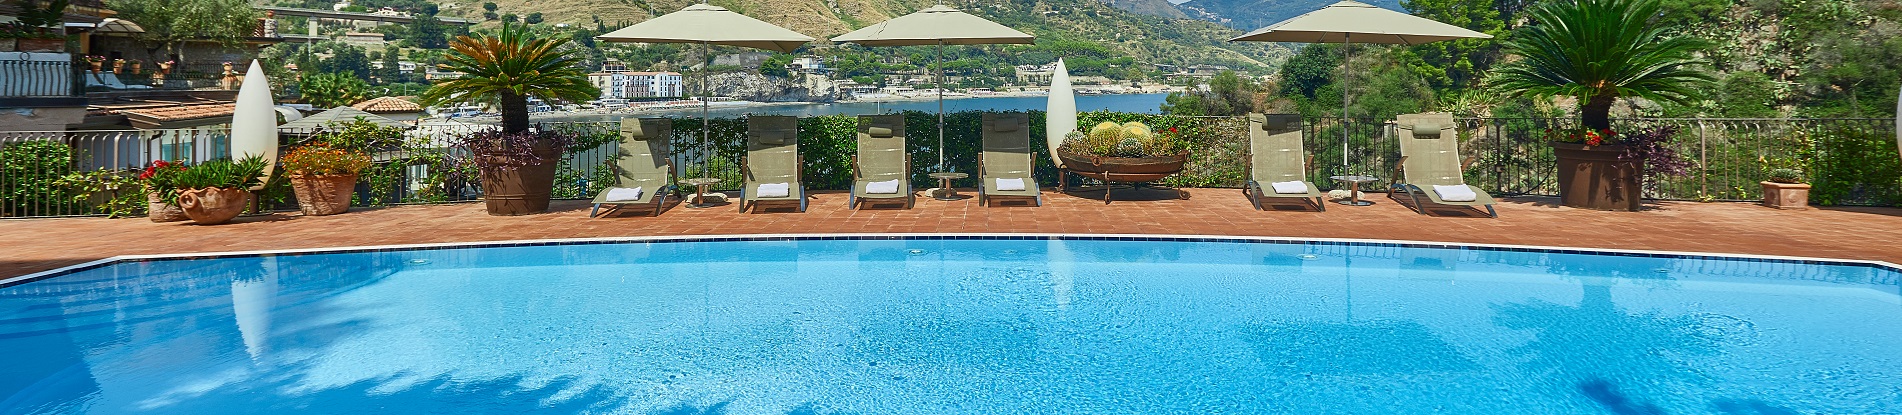 Luxury villas in Sicily with pools